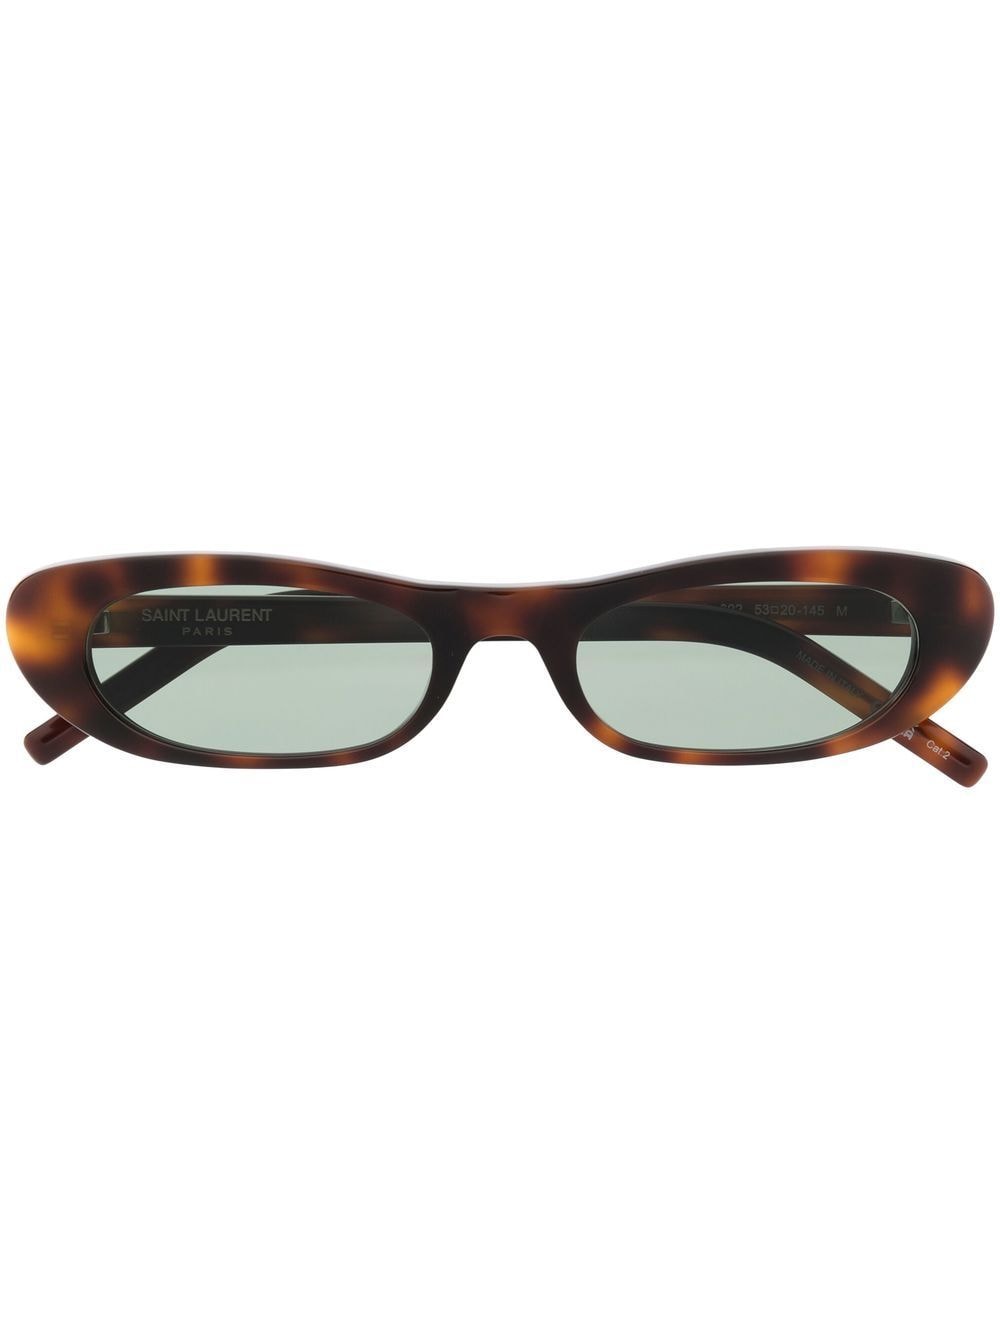 Saint Laurent Eyewear SL 557 slim tortoiseshell sunglasses - Green von Saint Laurent Eyewear